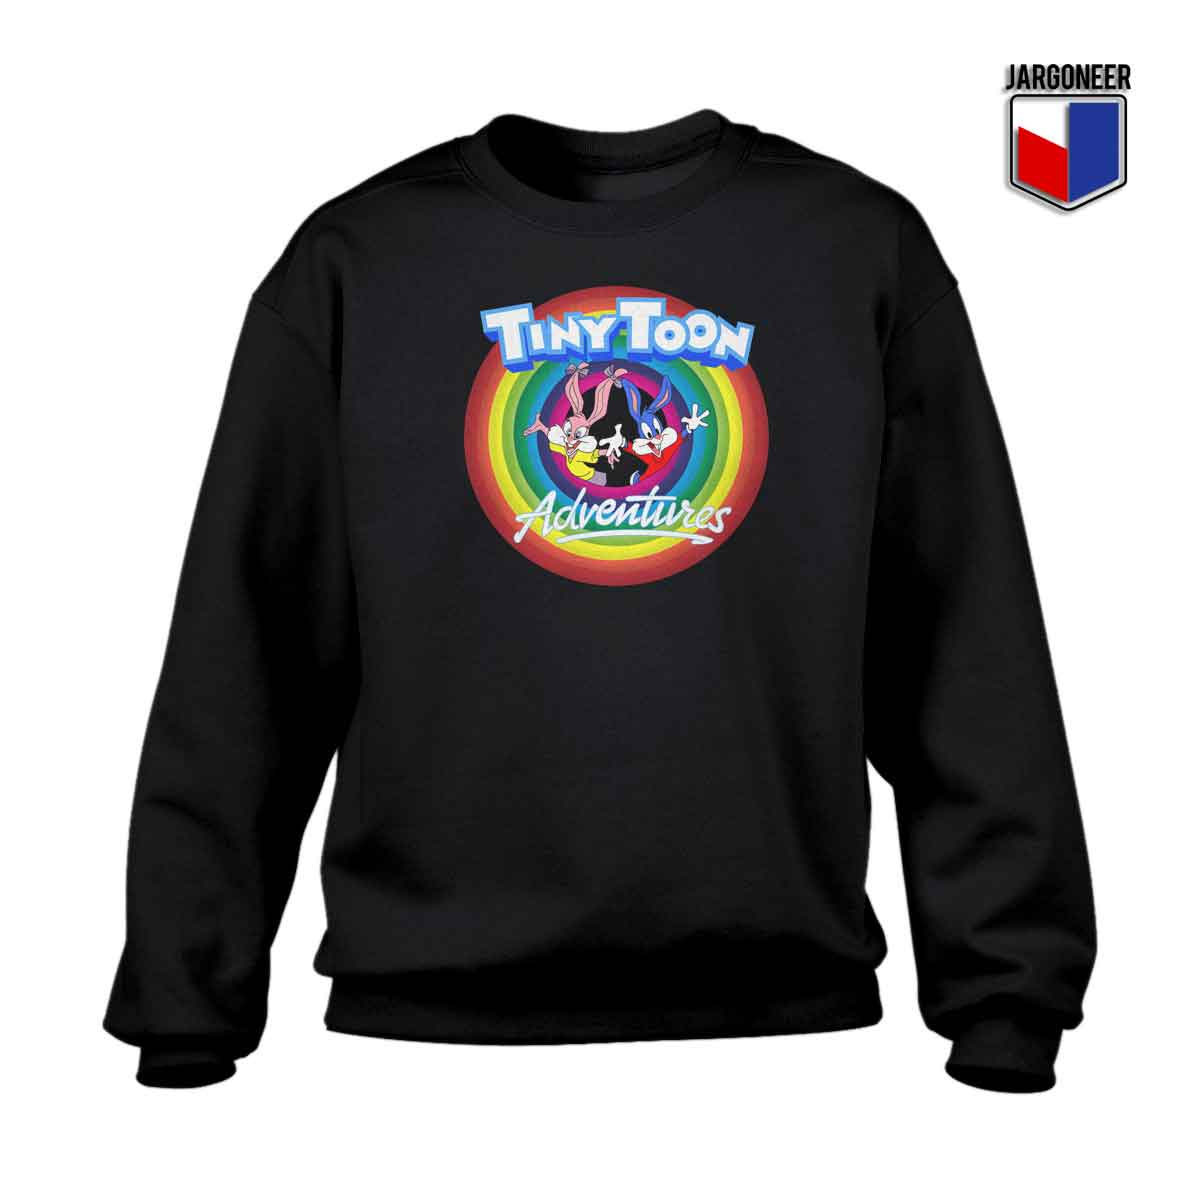 Tiny Toons Adventure 1 - Shop Unique Graphic Cool Shirt Designs